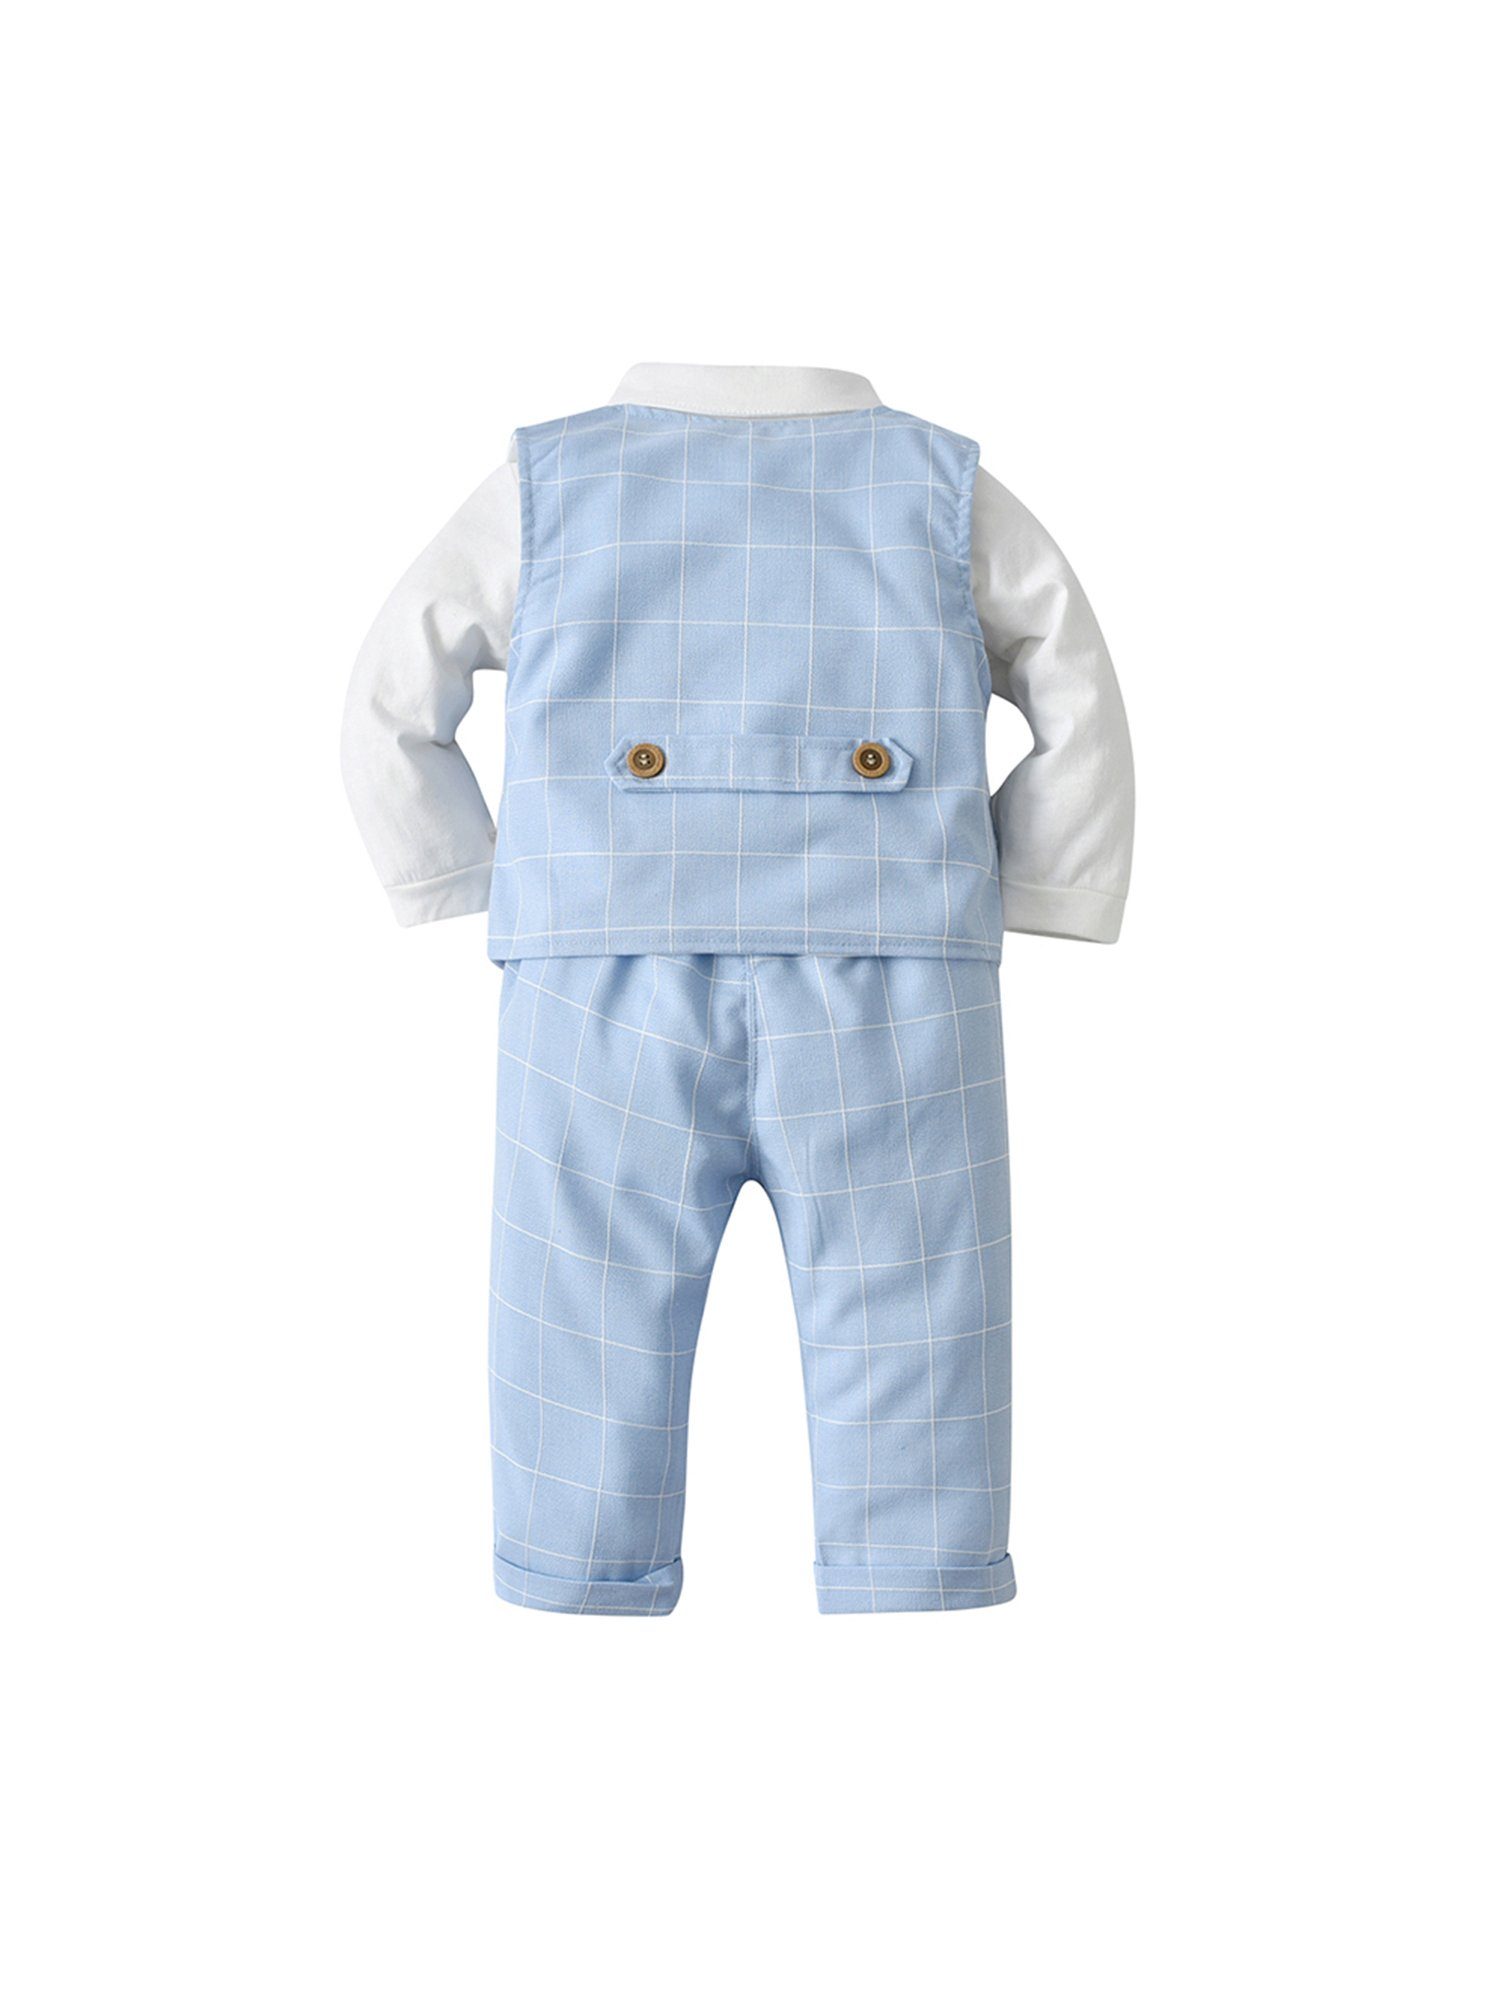 Lapastyle Anzug Baby Jungen Blau Hose, dreiteiliges Set Weste, Langarm-Shirt